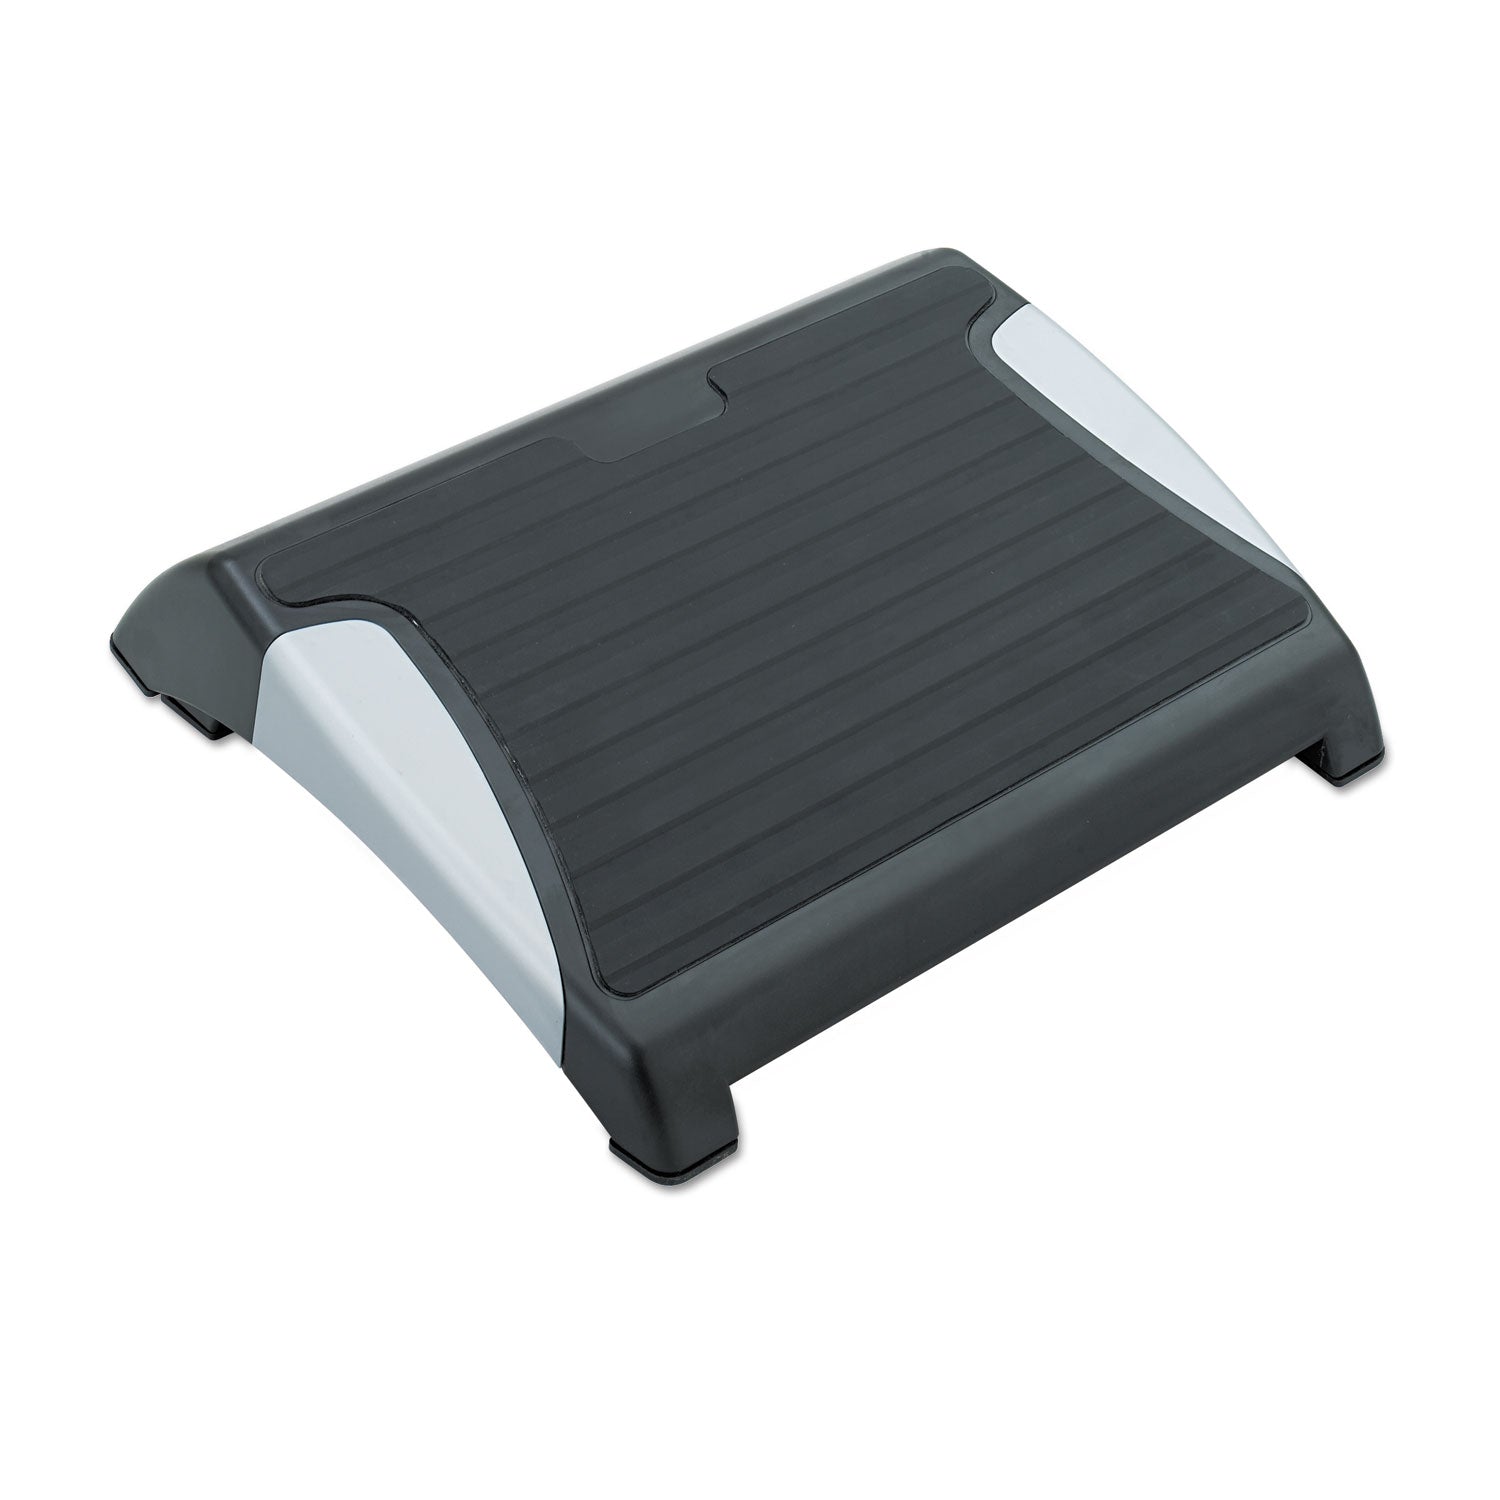 Restease Adjustable Footrest, 15.5w x 13.75d x 3.25 to 5h, Black/Silver - 